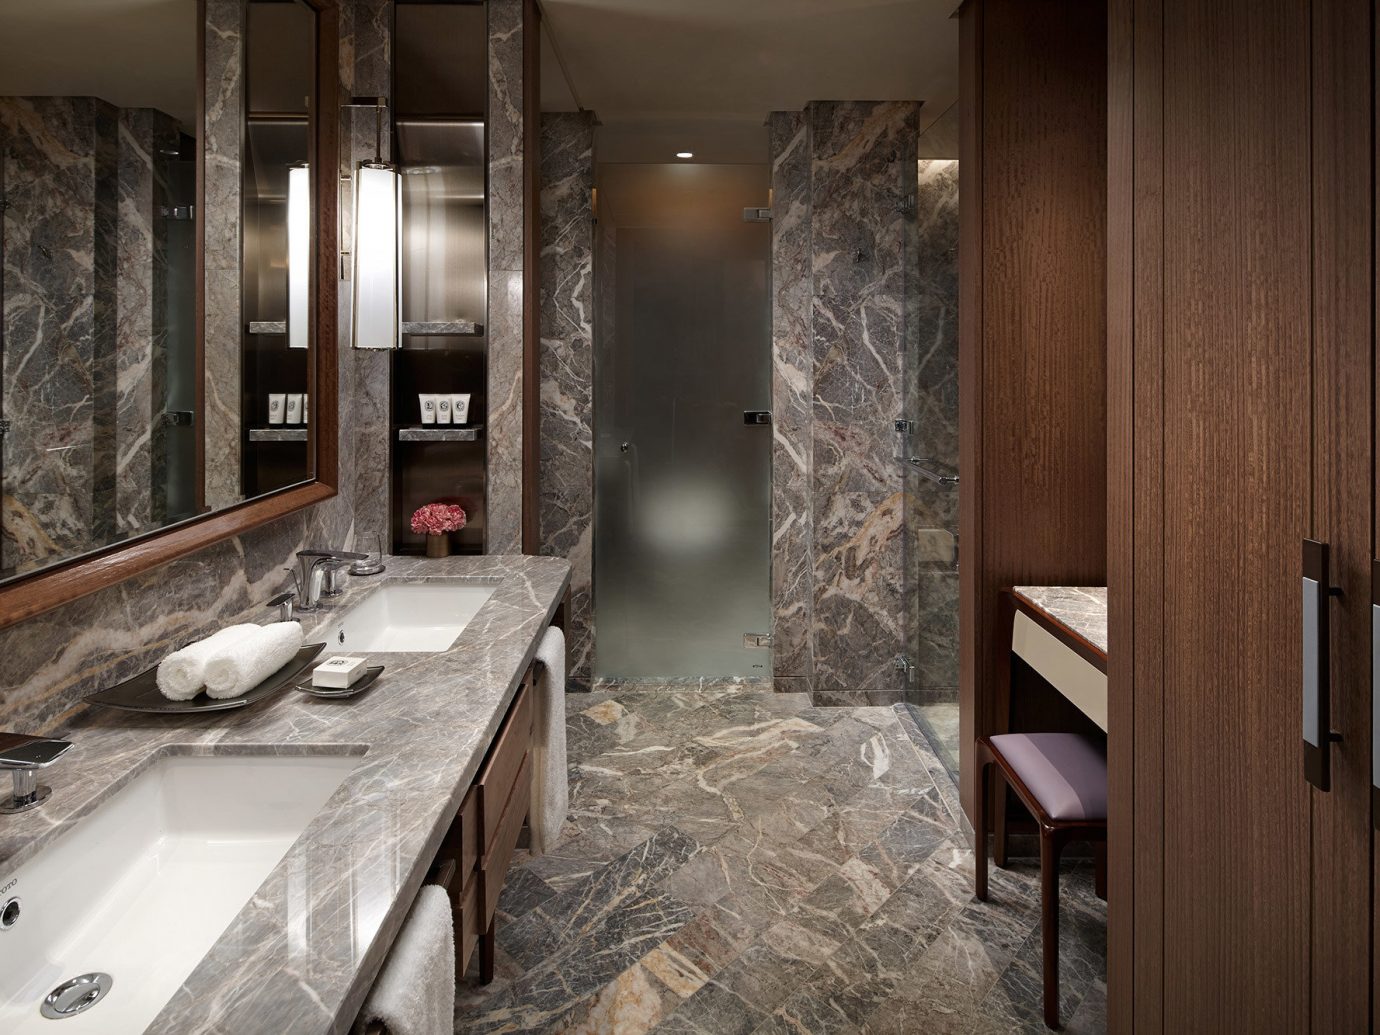 Hotels Luxury Travel indoor bathroom wall sink room countertop interior design flooring floor Bath basement bathtub